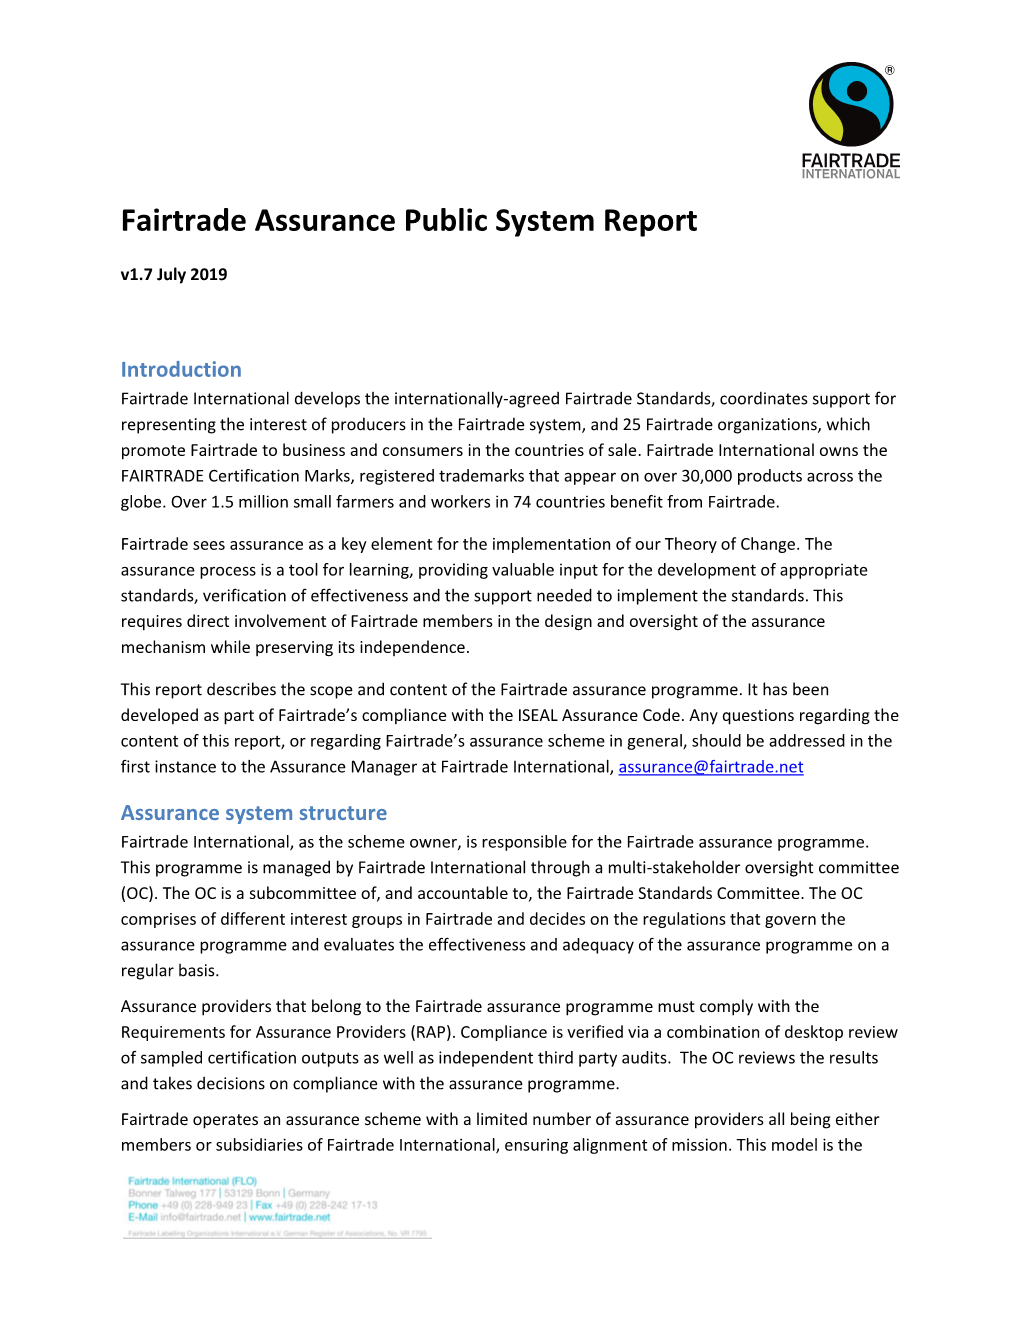 Fairtrade Assurance Public System Report V1.7 July 2019